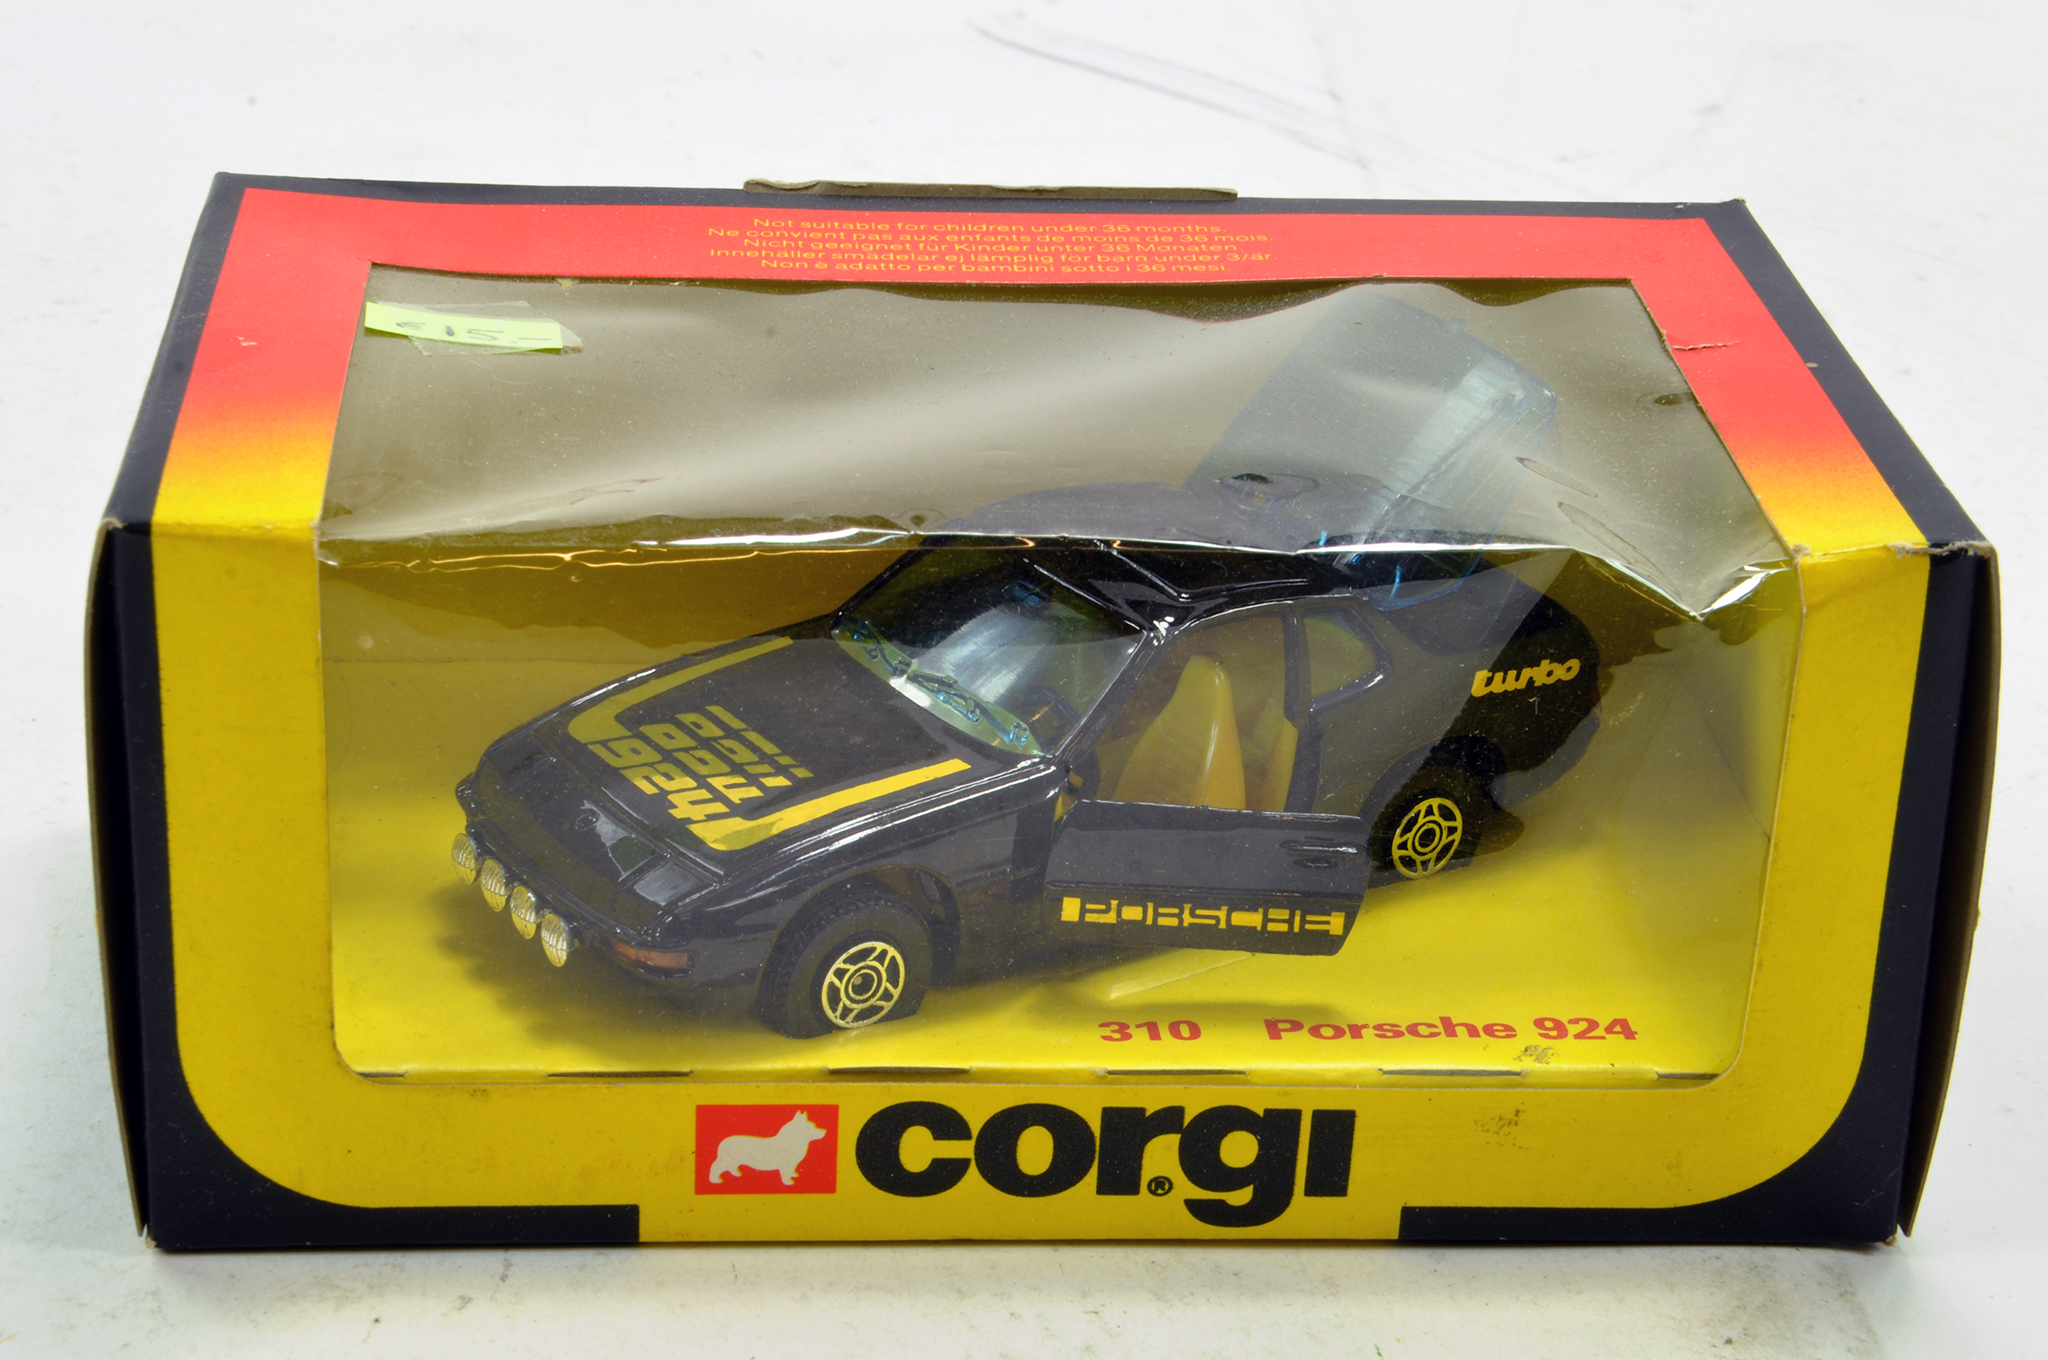 Corgi No. 310 Porsche 924. Excellent to Near Mint in Box.